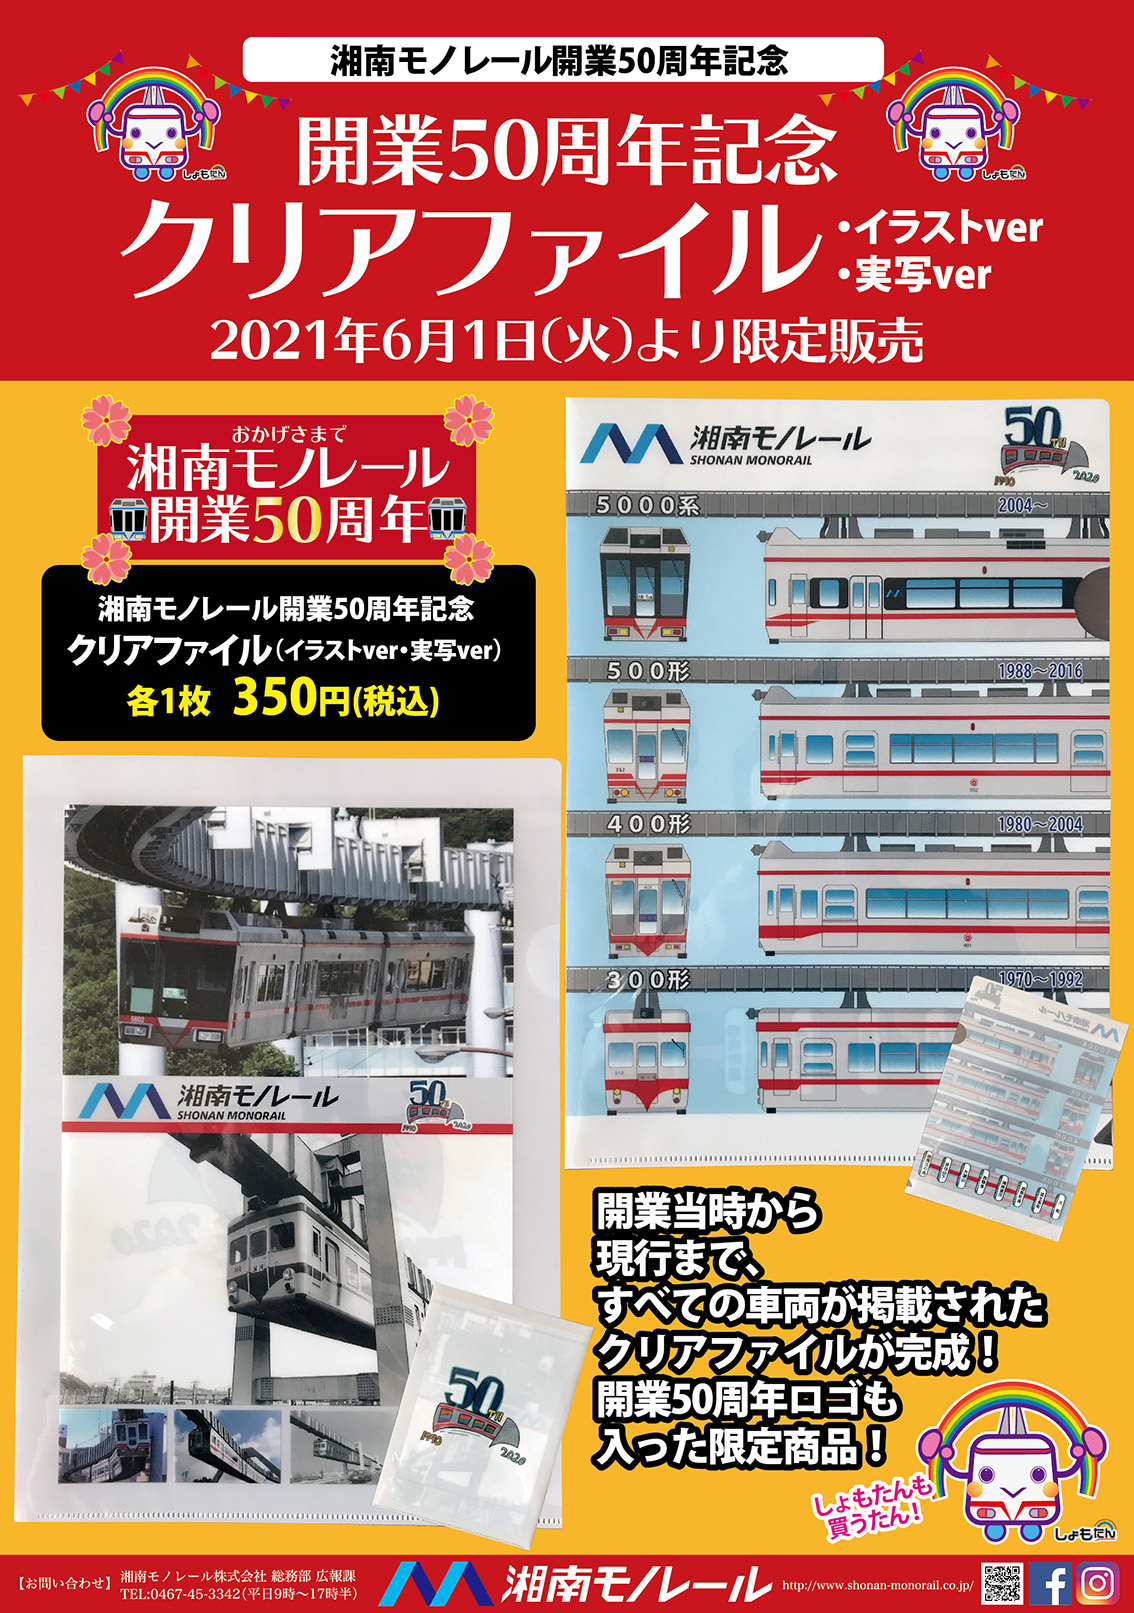 https://www.shonan-monorail.co.jp/news/upload/small_50th_clearfile.jpg